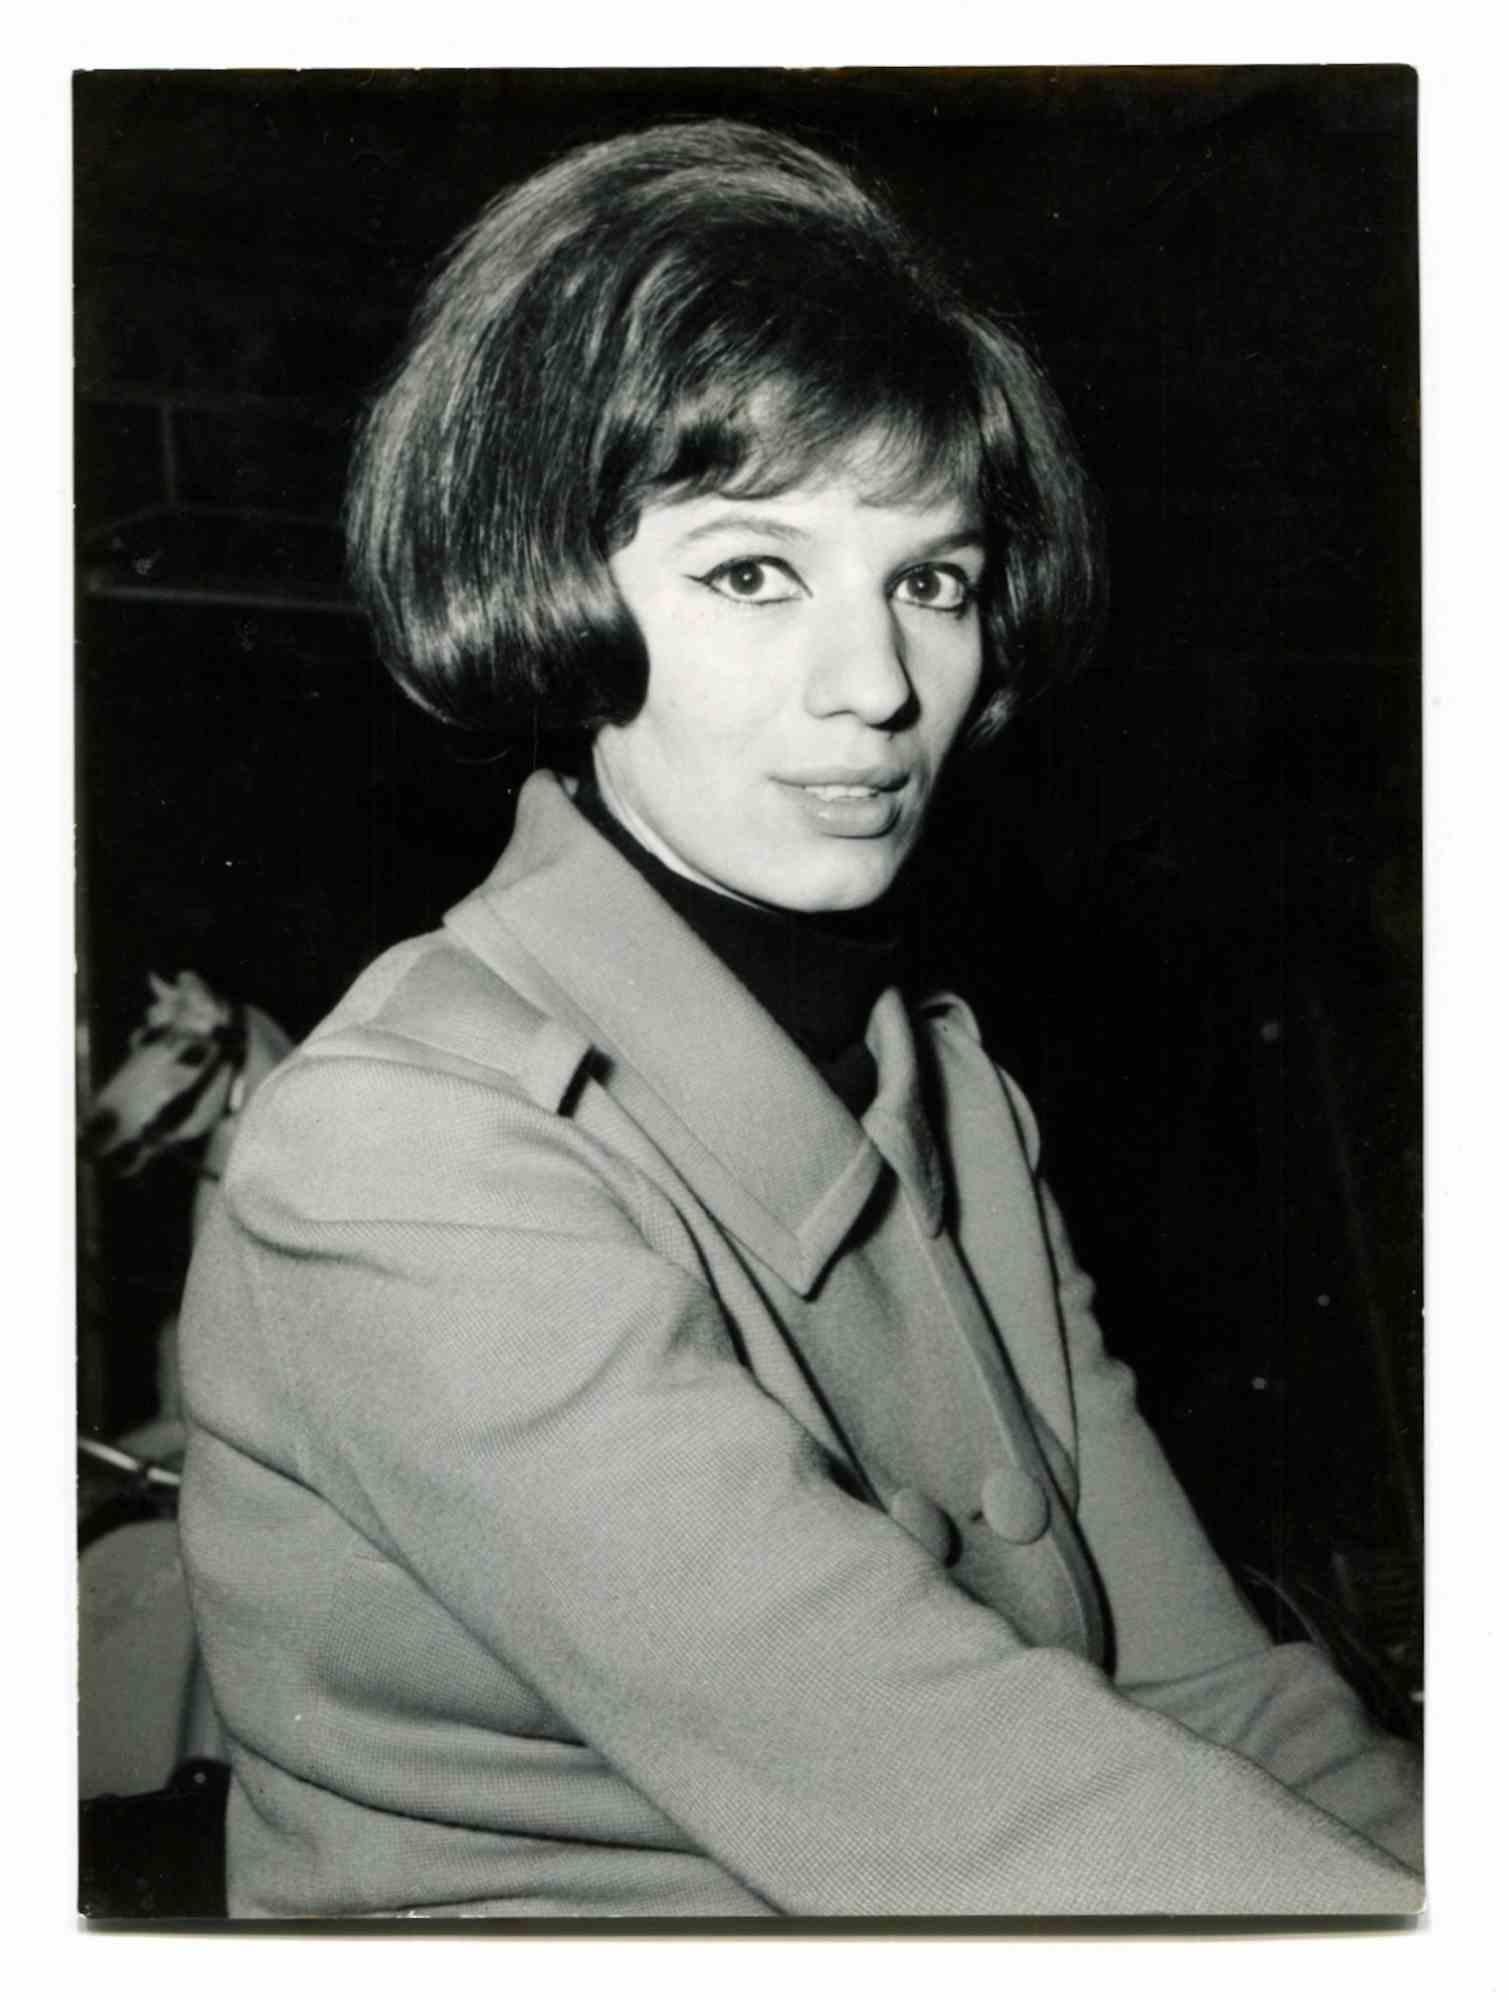 Unknown Portrait Photograph - Photo of Iva Zanicchi - Vintage Photo - 1970s